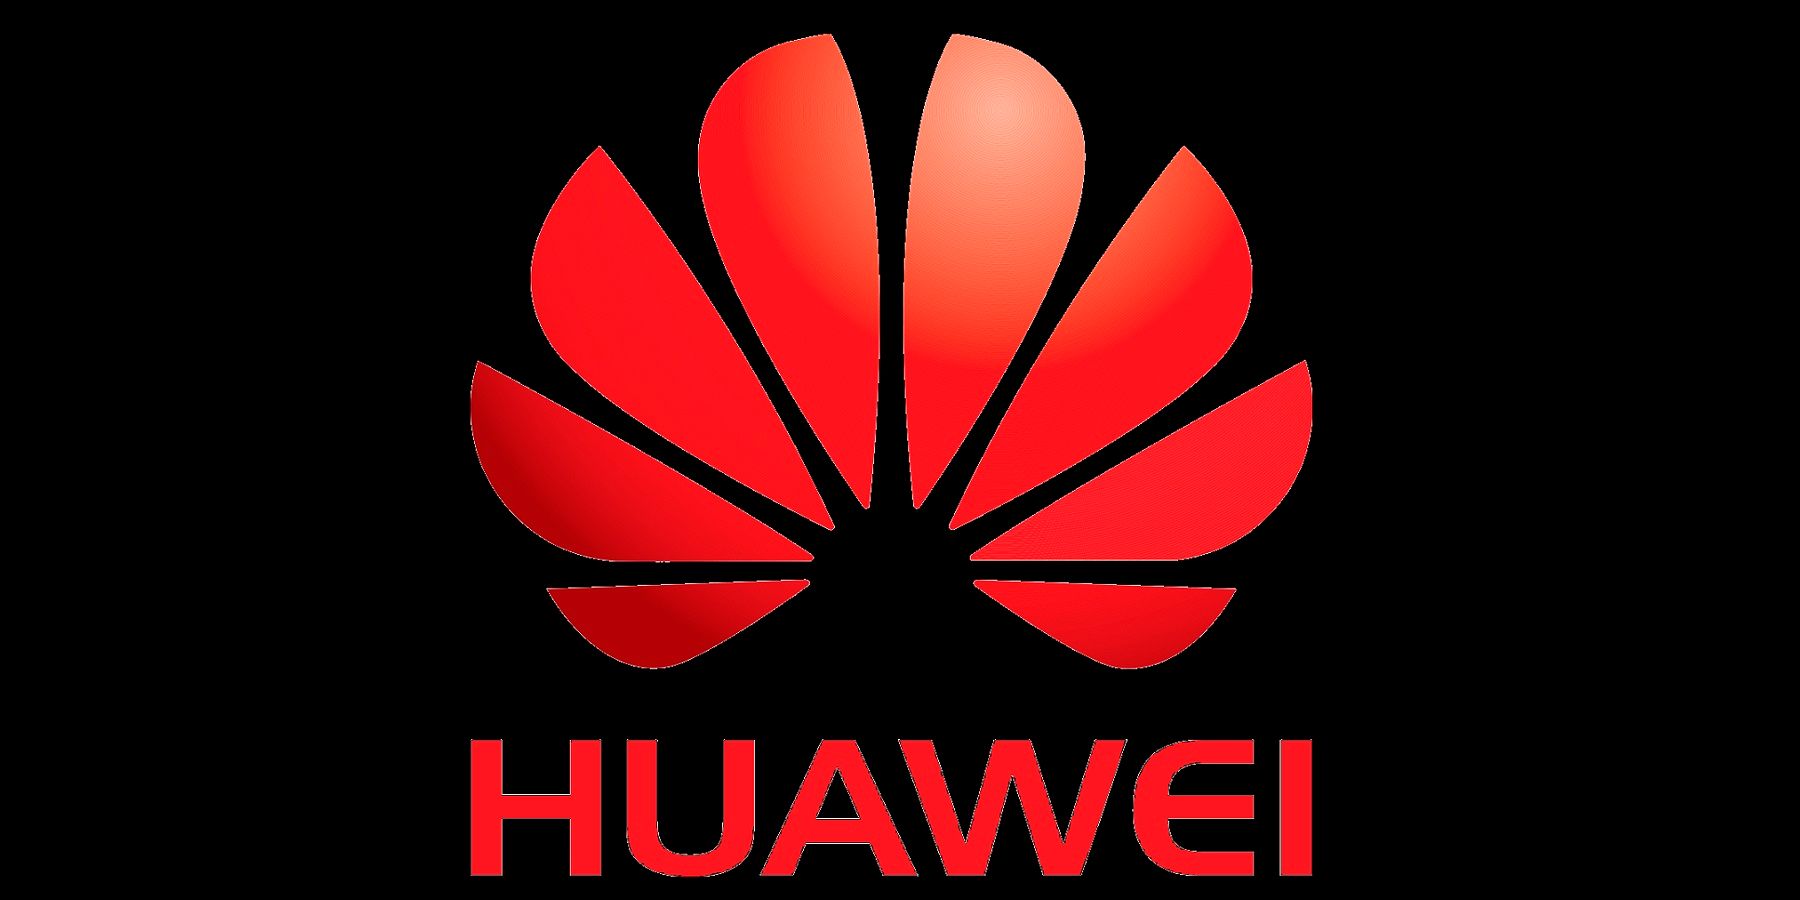 China Huawei brand logo